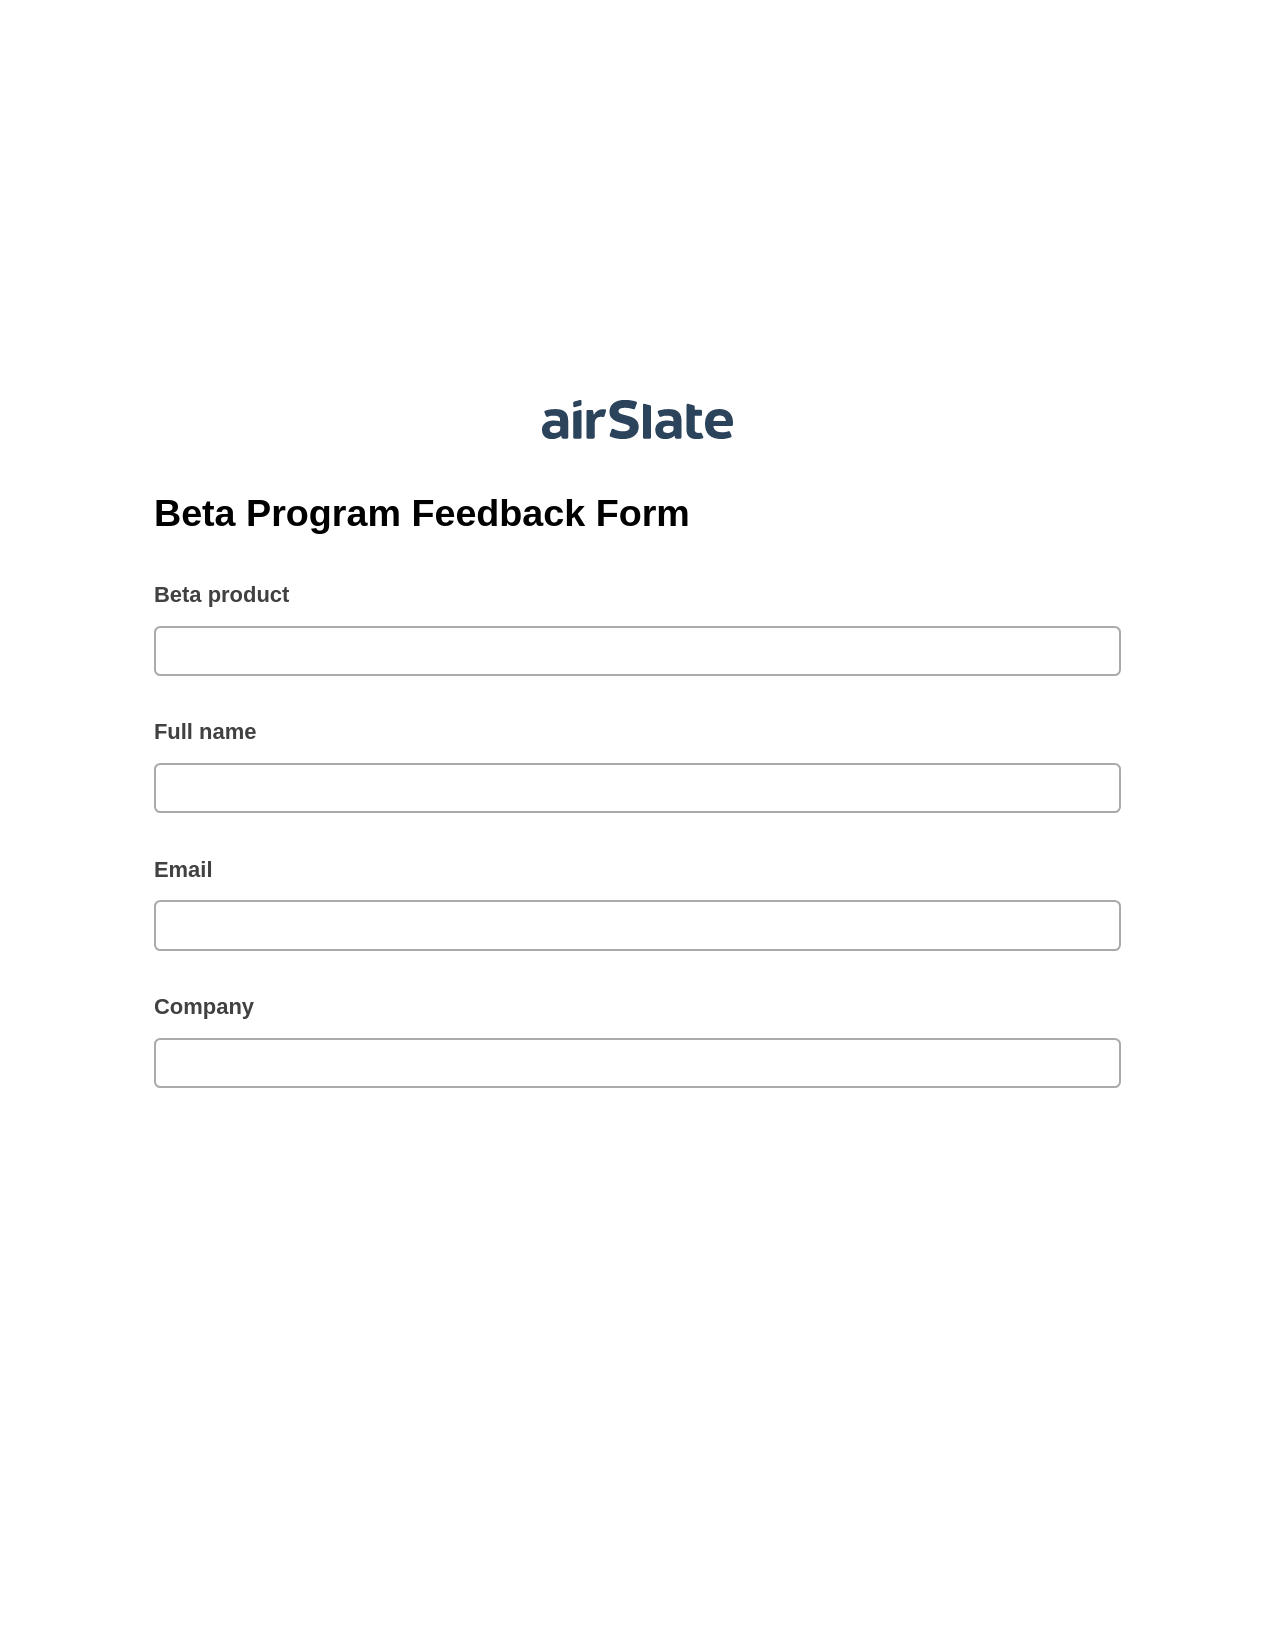 Multirole Beta Program Feedback Form Pre-fill from Smartsheet Bot, SendGrid send Campaign bot, Export to Smartsheet